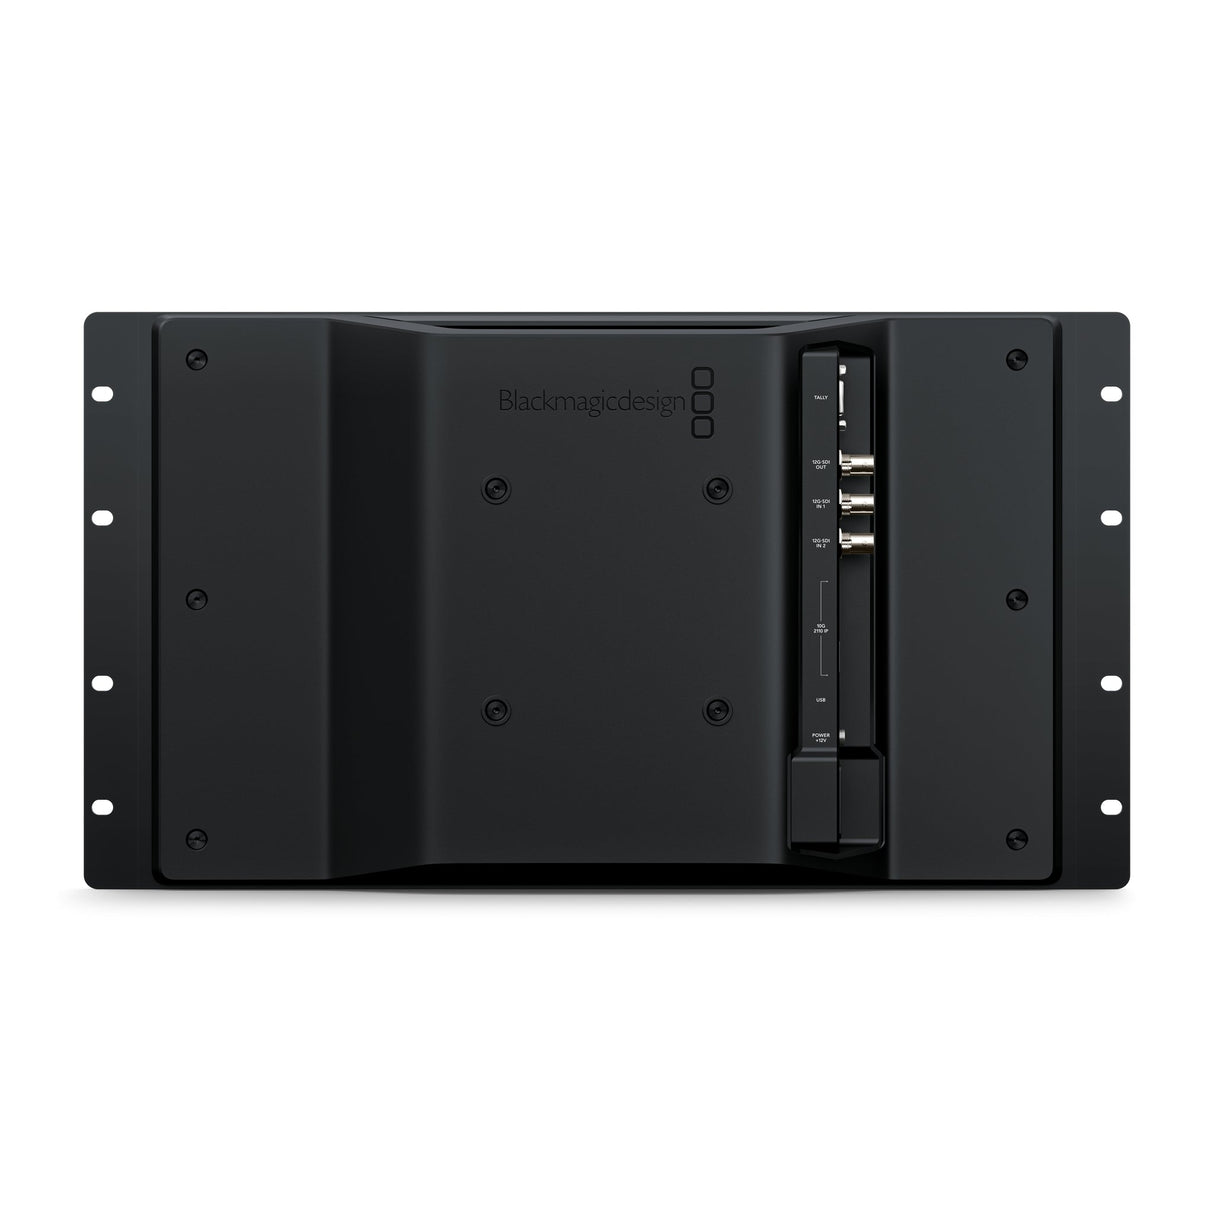 Blackmagic Design SmartView 4K G3 Ultra HD Broadcast Monitor, 12G-SDI/SMPTE-2110 IP